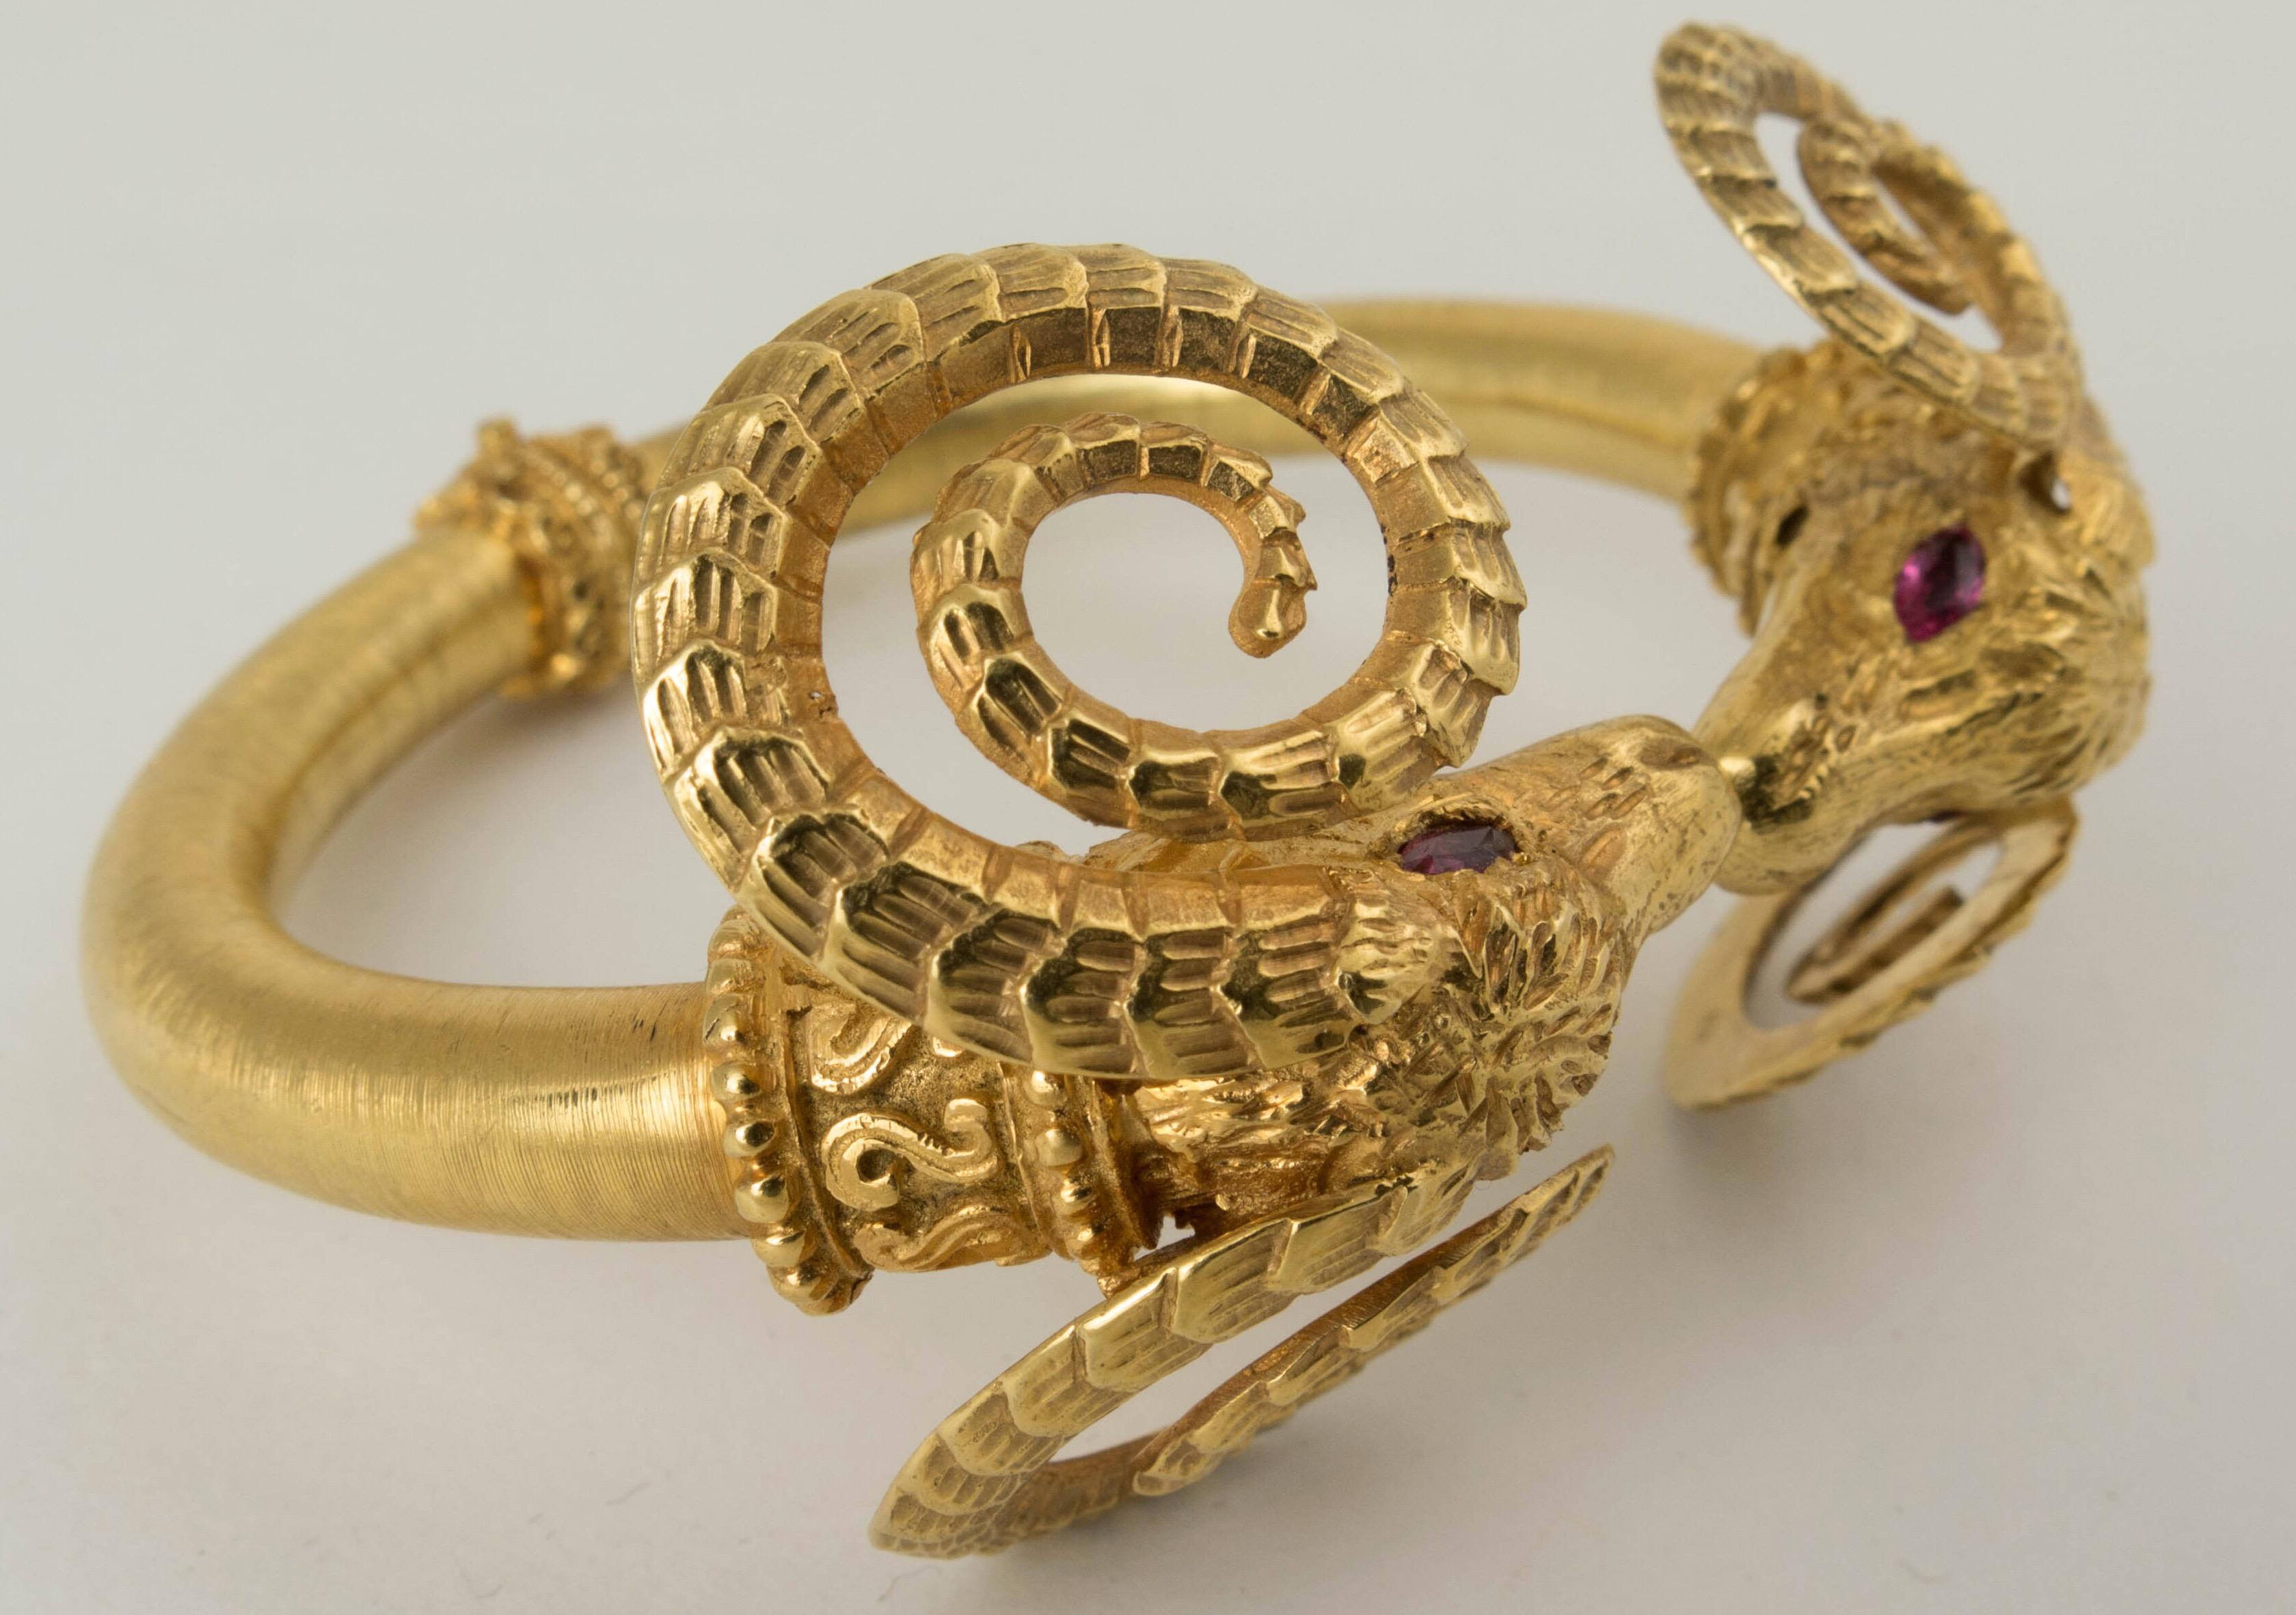 Zolotas 18 Karat Gold Two Ram Heads Bangle Bracelet 3